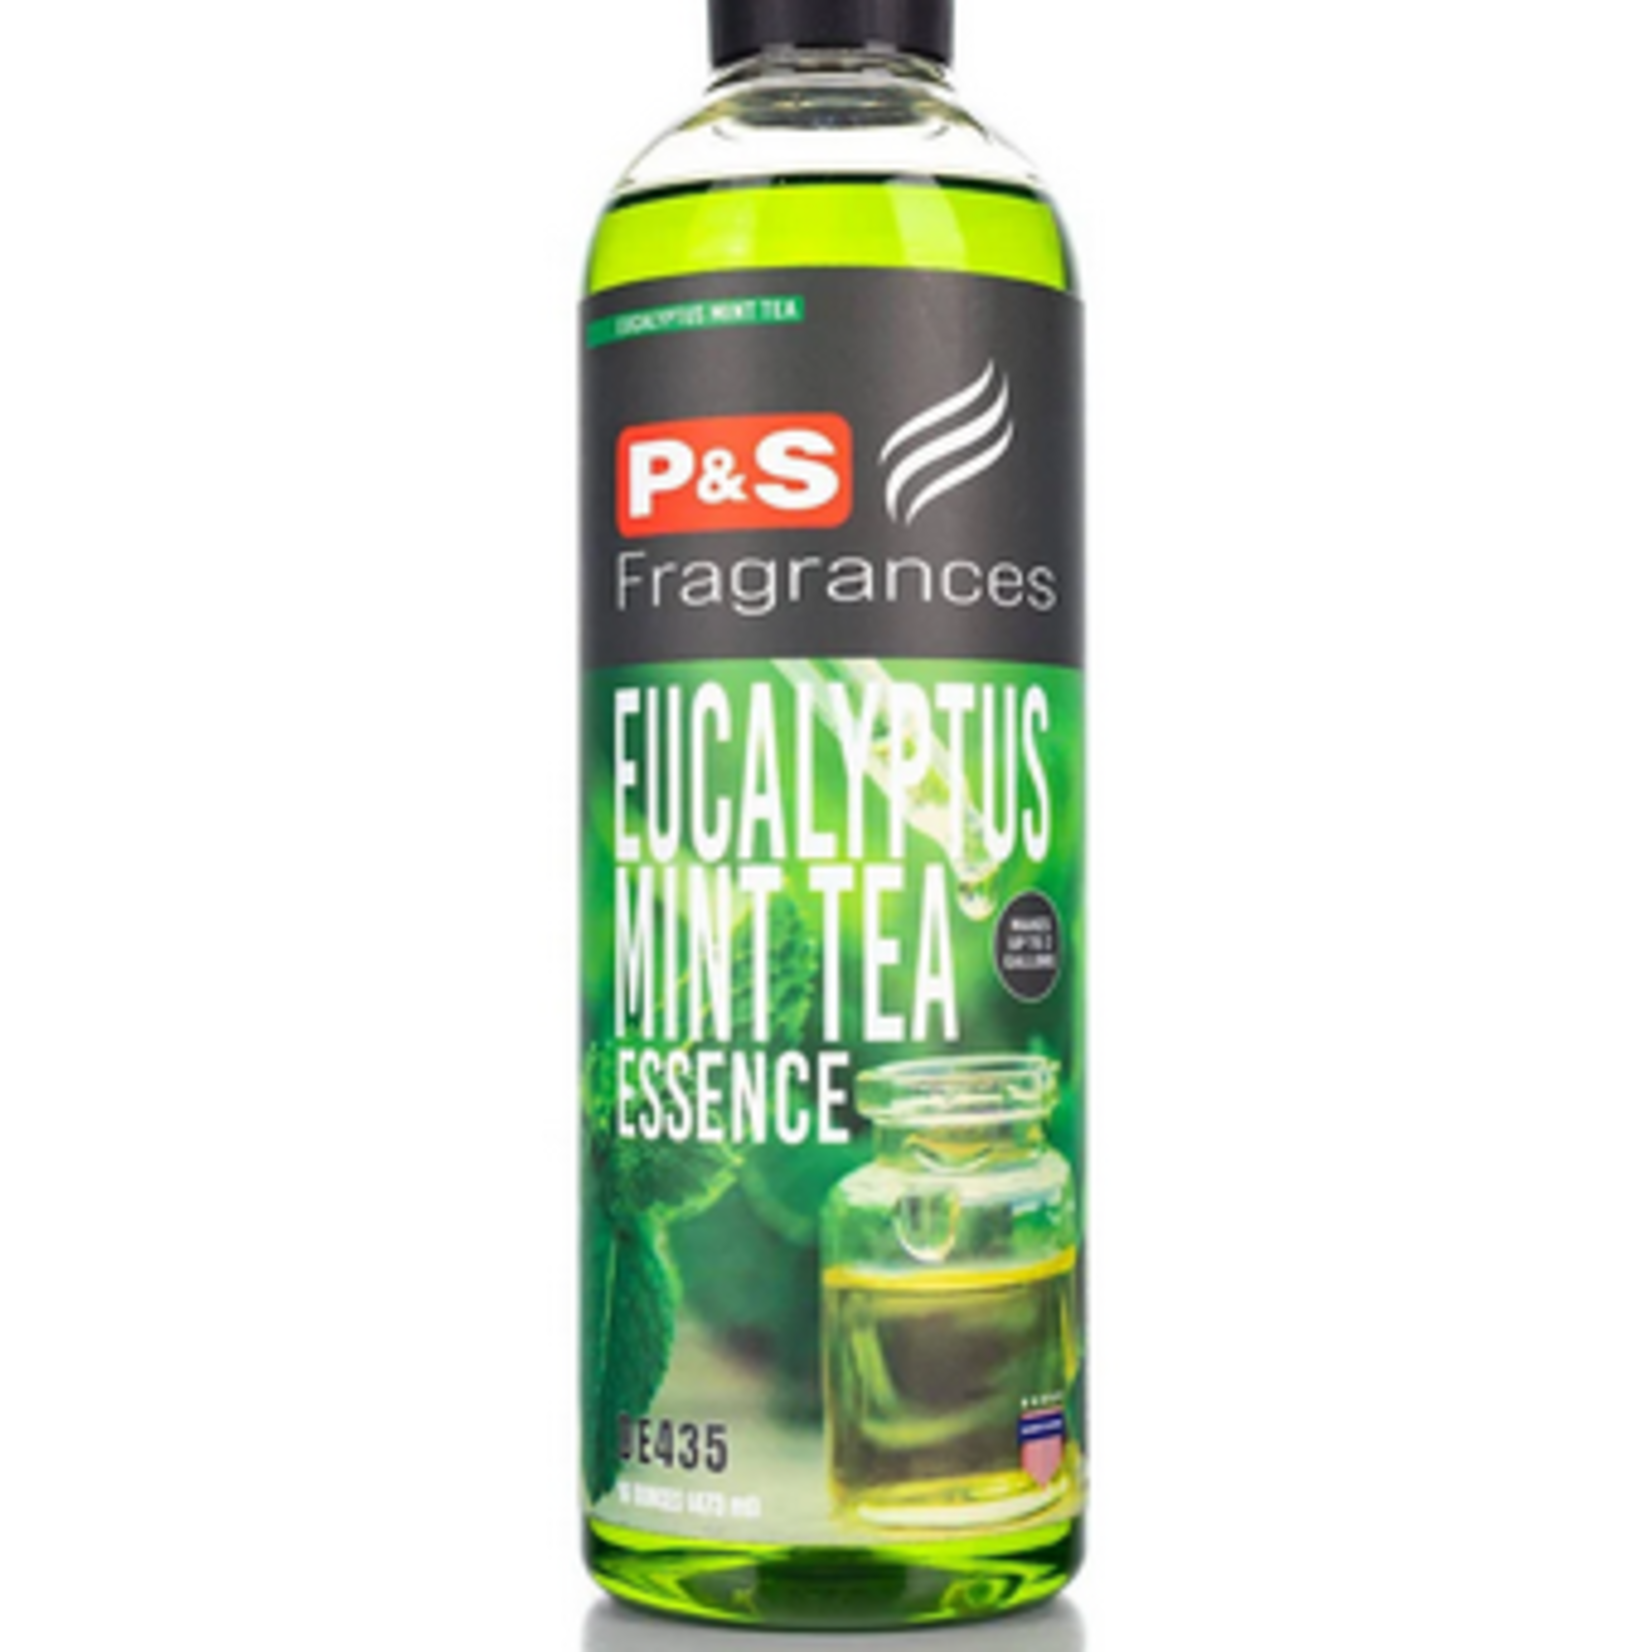 P&S P&S - Fragrance Eucalyptus Mint Tea